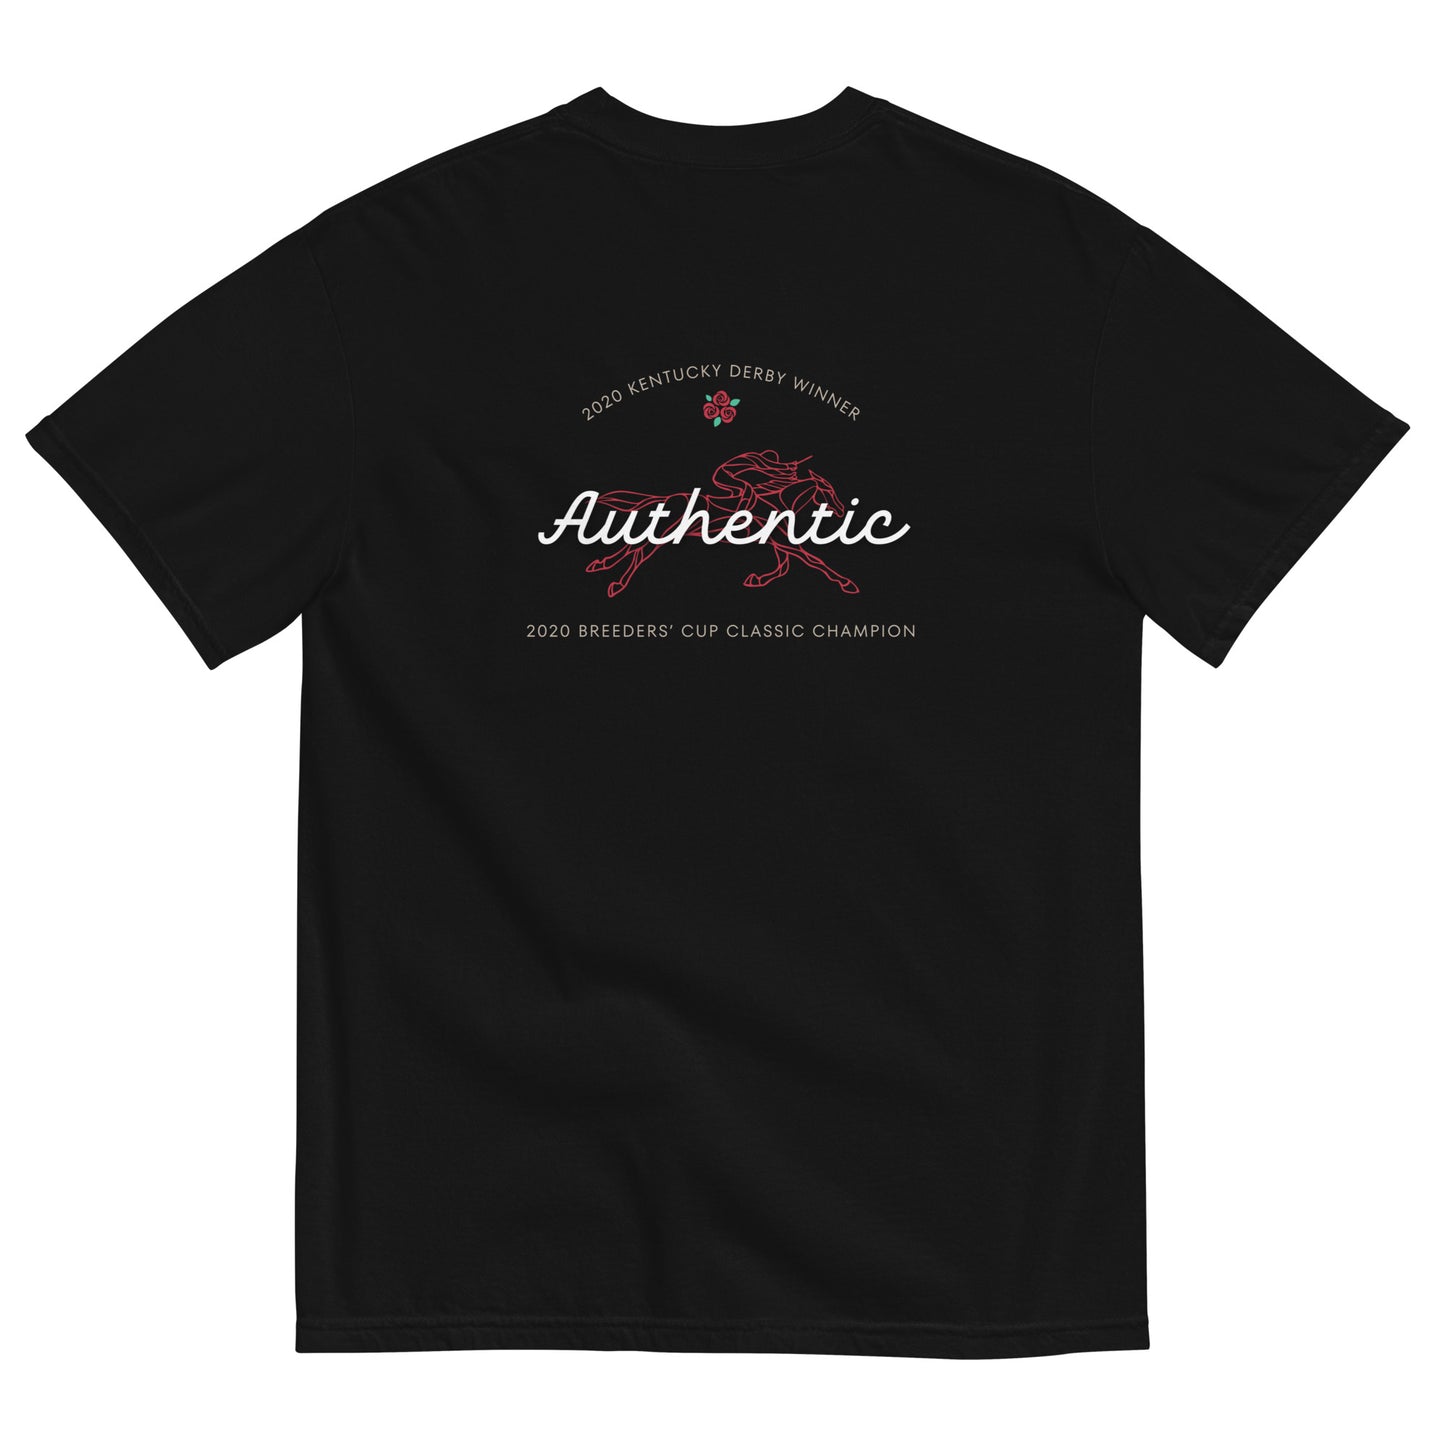 Unisex Authentic garment-dyed heavyweight t-shirt